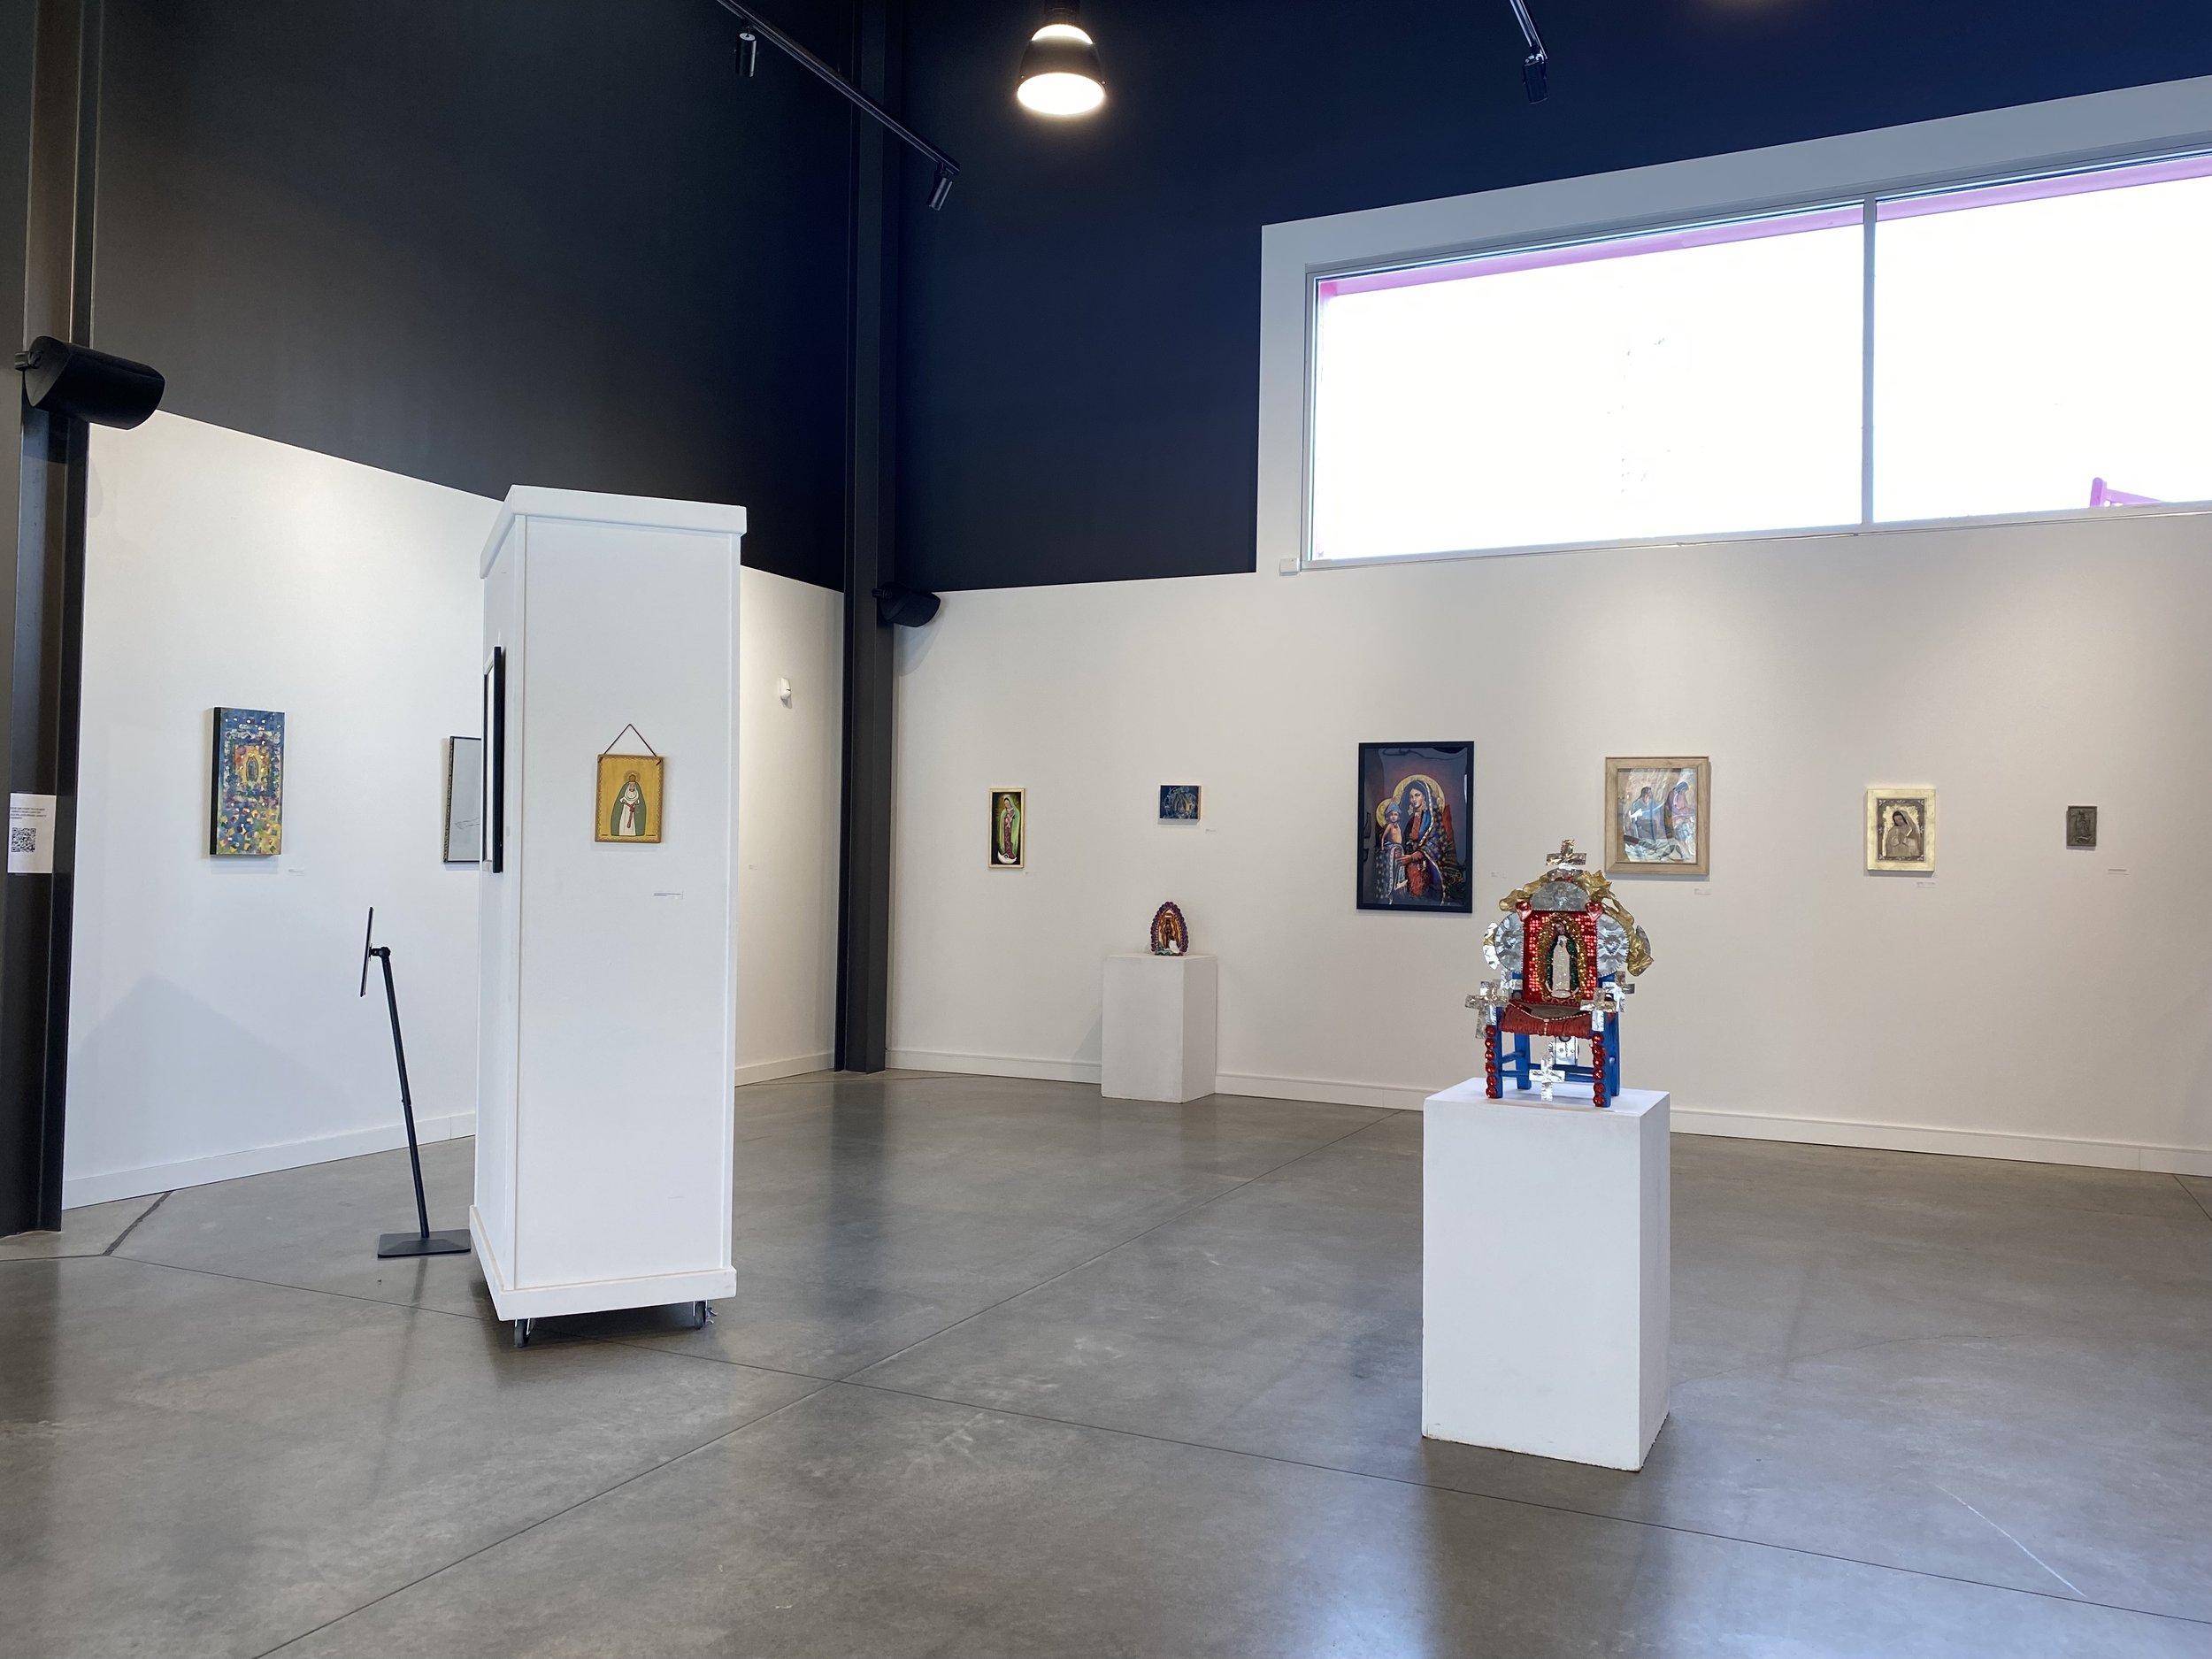  Installation image of a La Onda exhibition at Mattie Rhodes Cultural Center (Kansas City, Missouri) 